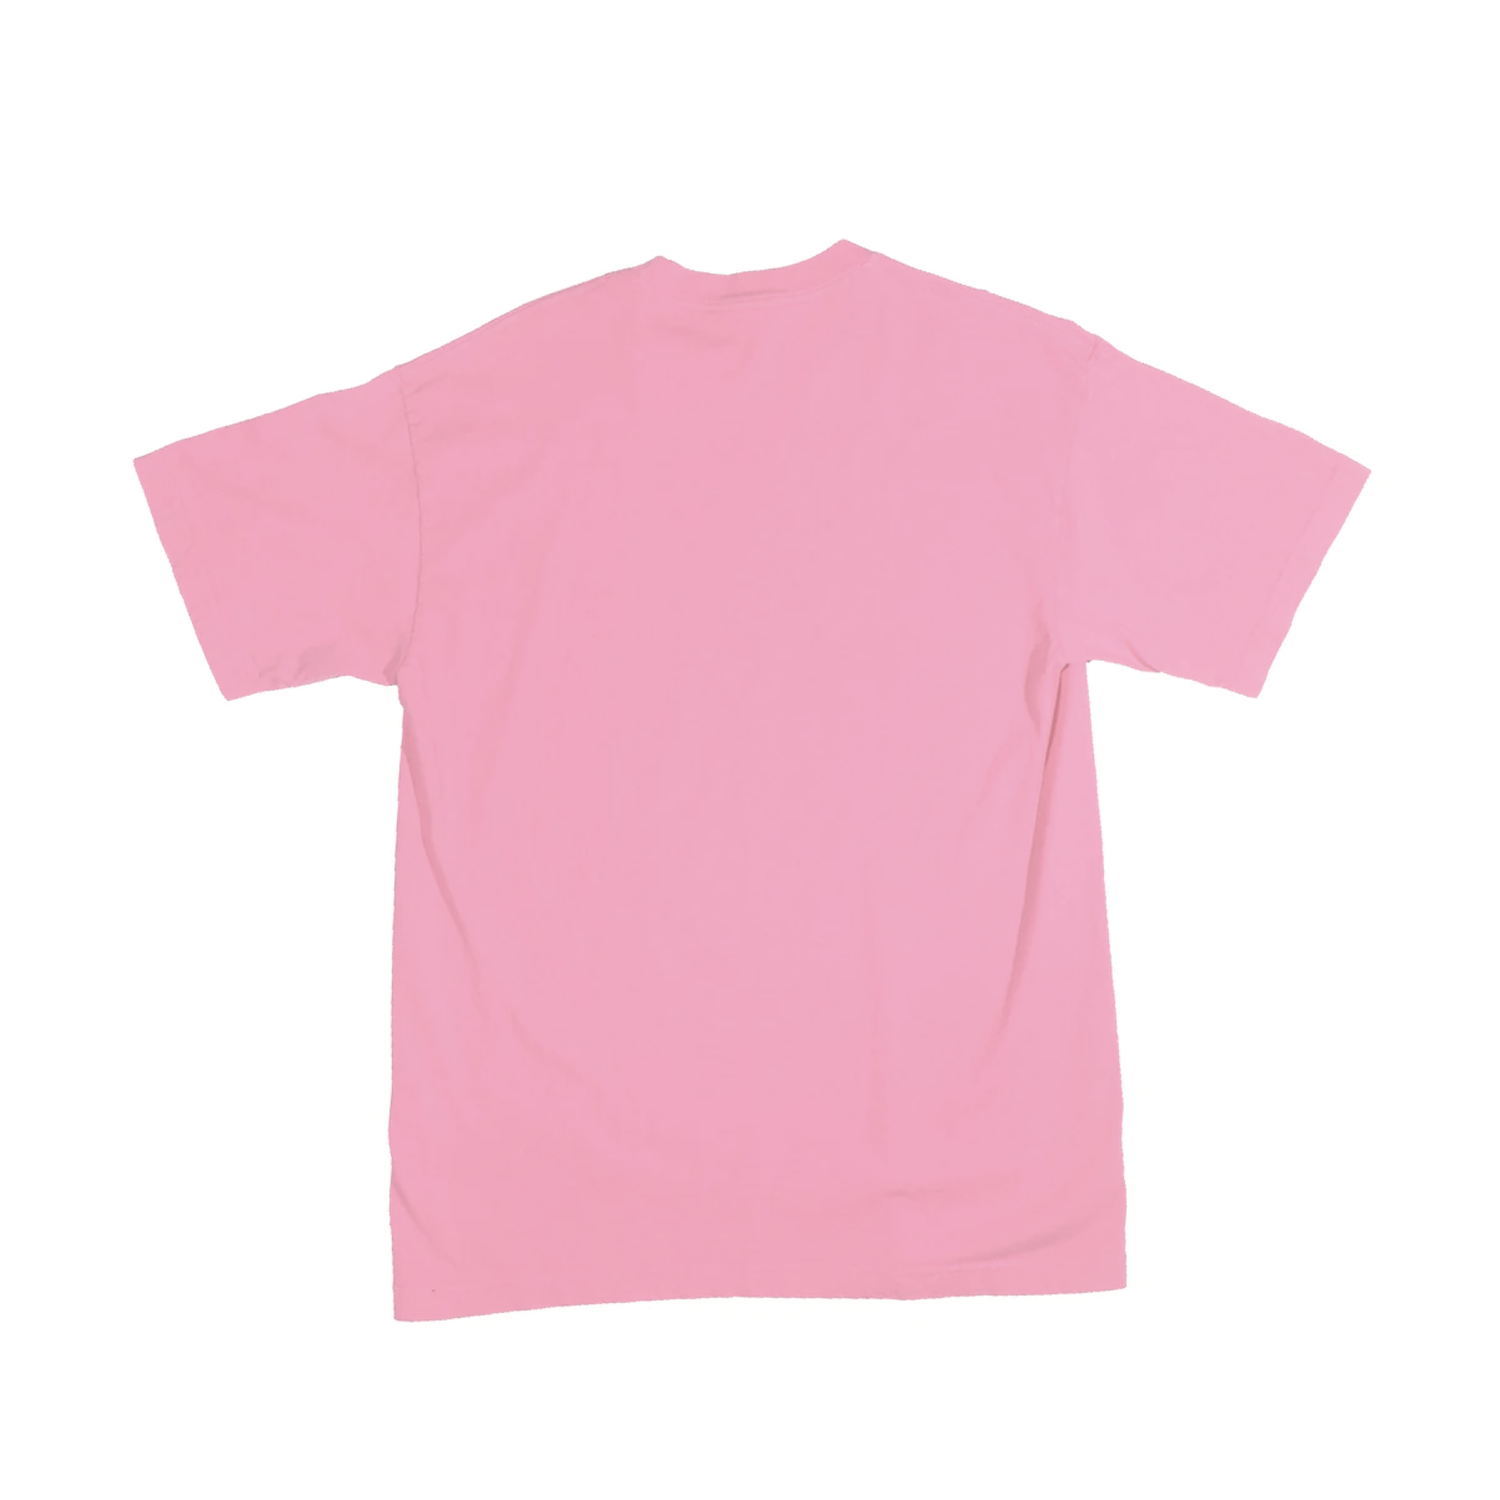 Garment Dye Shirt